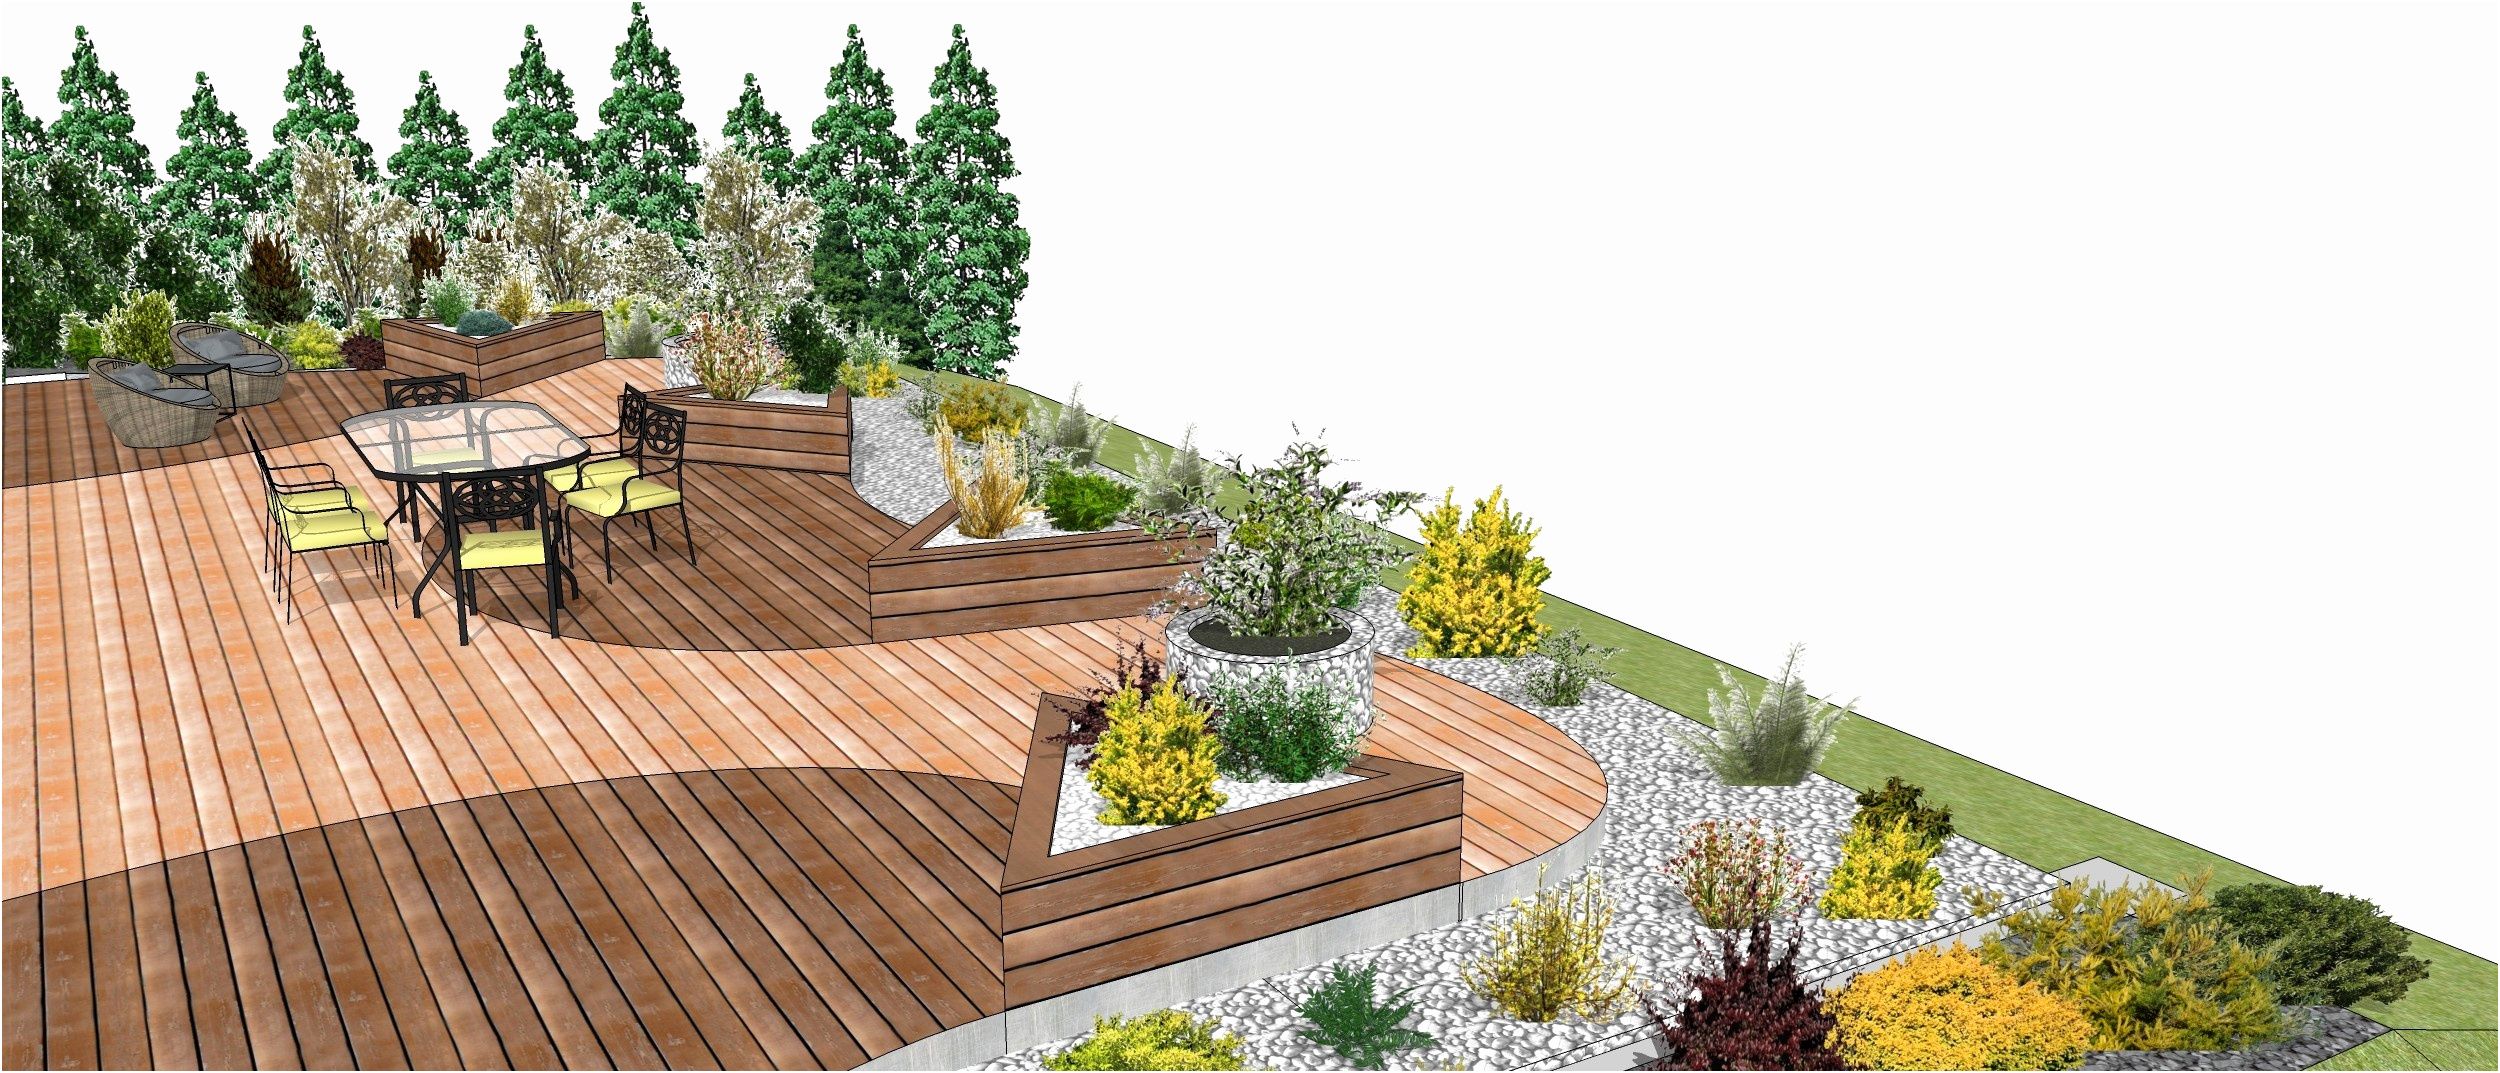 Amenager Un Jardin Génial Idee Jardin Sans Entretien Inspirant Outil De Jardinage